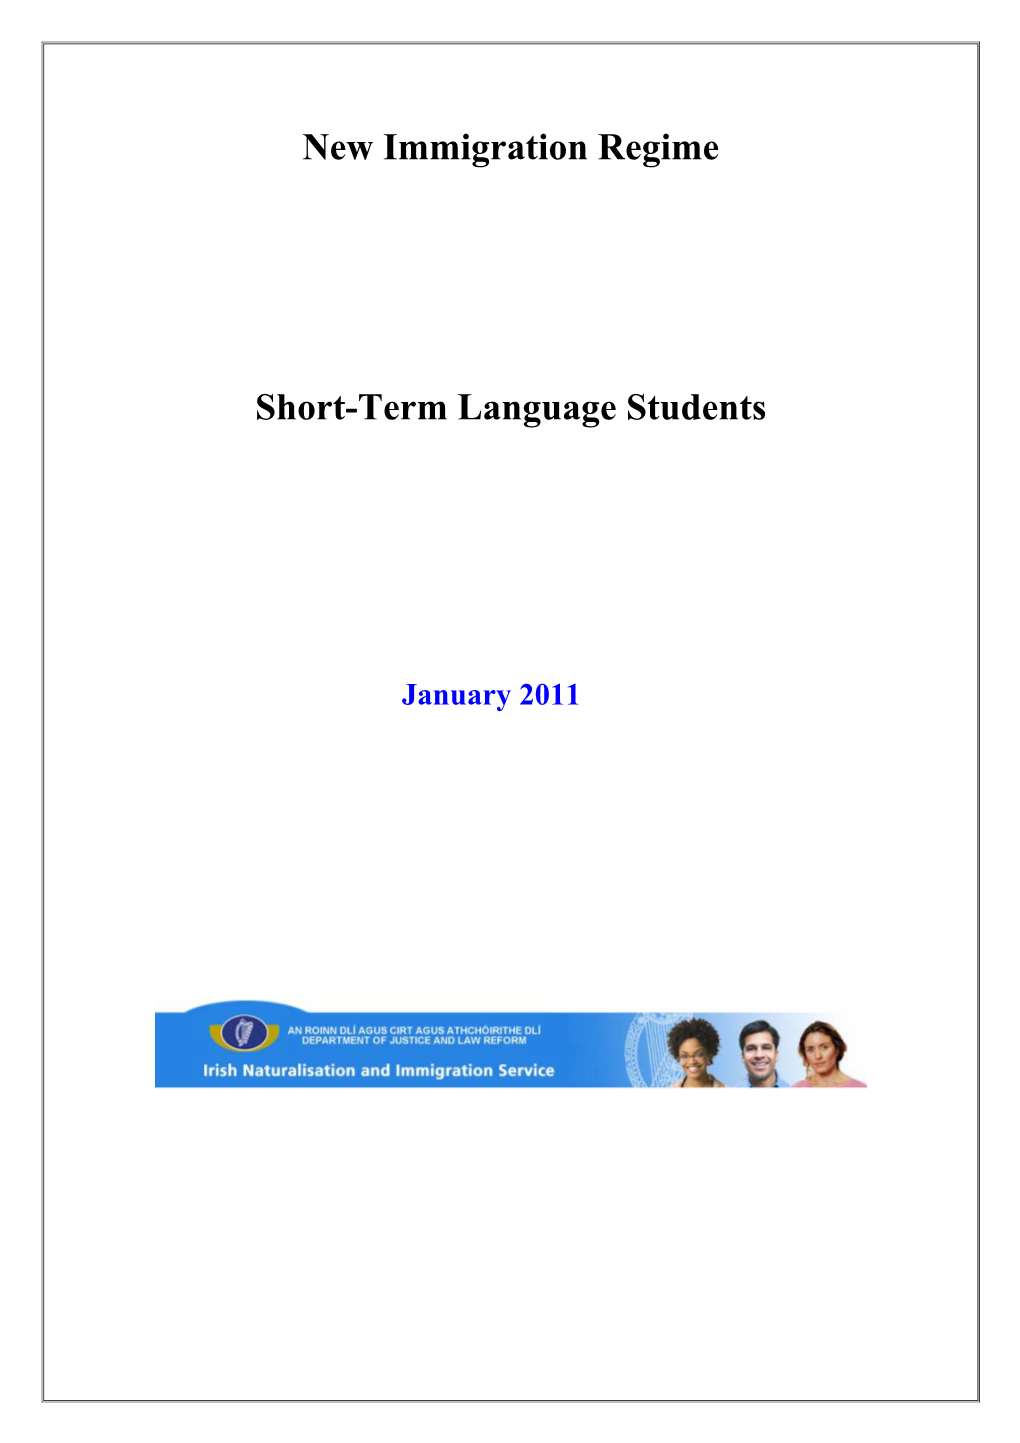 New Immigration Regime Short-Term Language Students